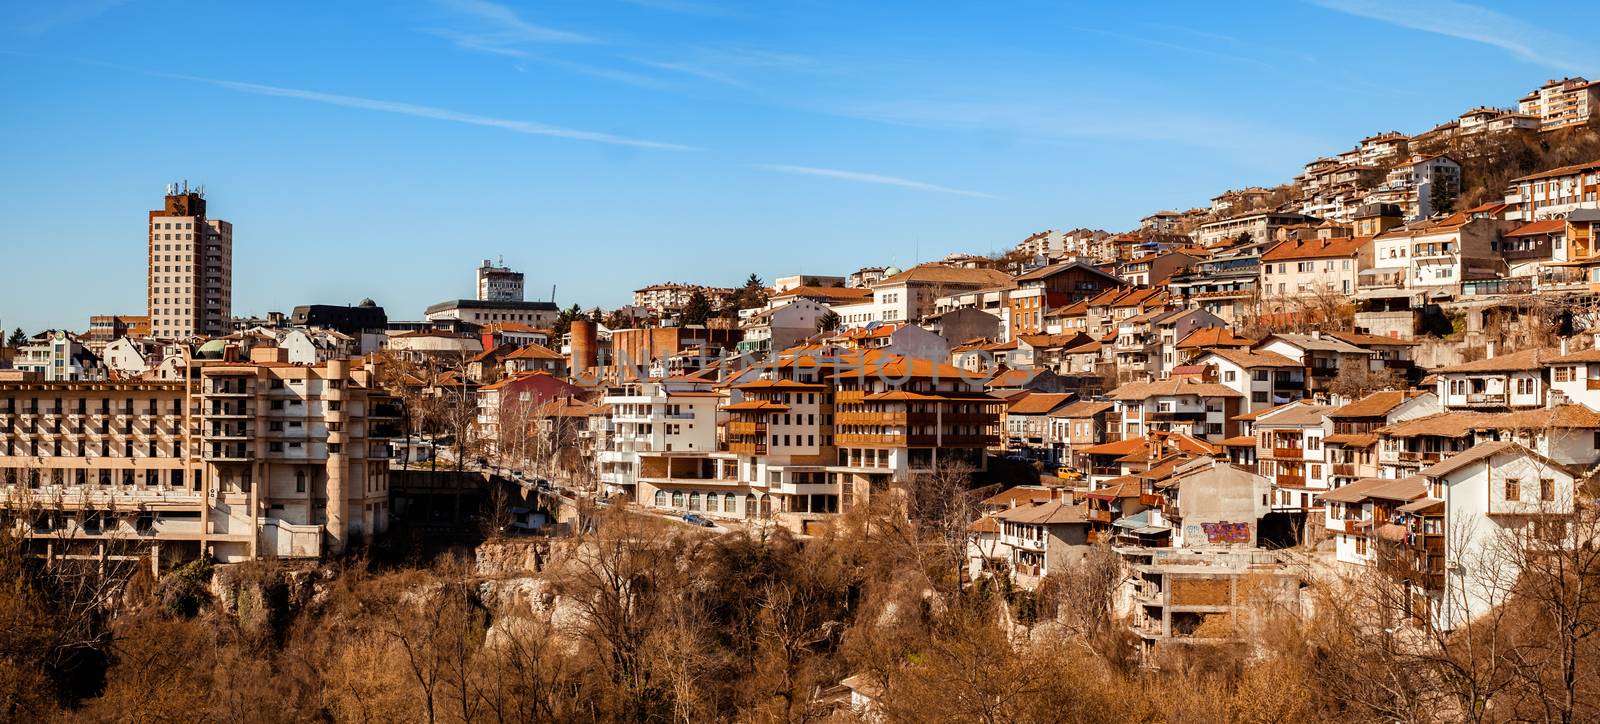 Veliko Tarnovo city, Bulgaria - March 24, 2017. Panoramic view over the city Veliko Tarnovo, Bulgaria